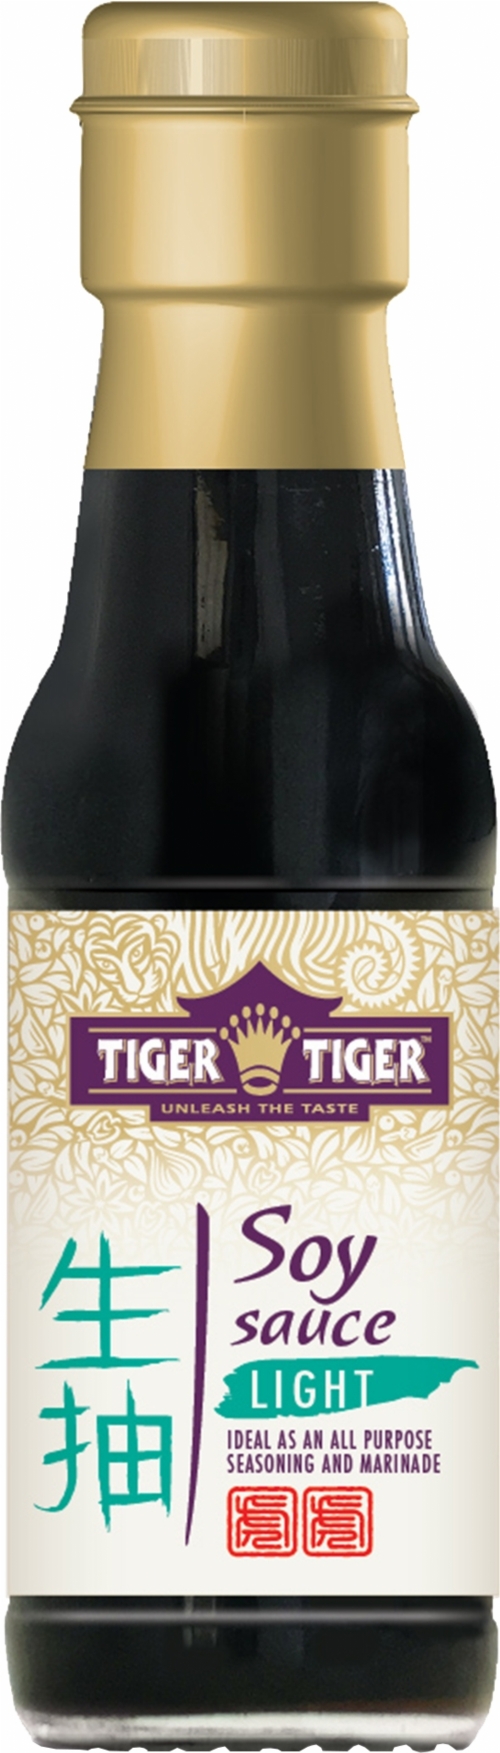 TIGER TIGER Light Soy Sauce 150ml